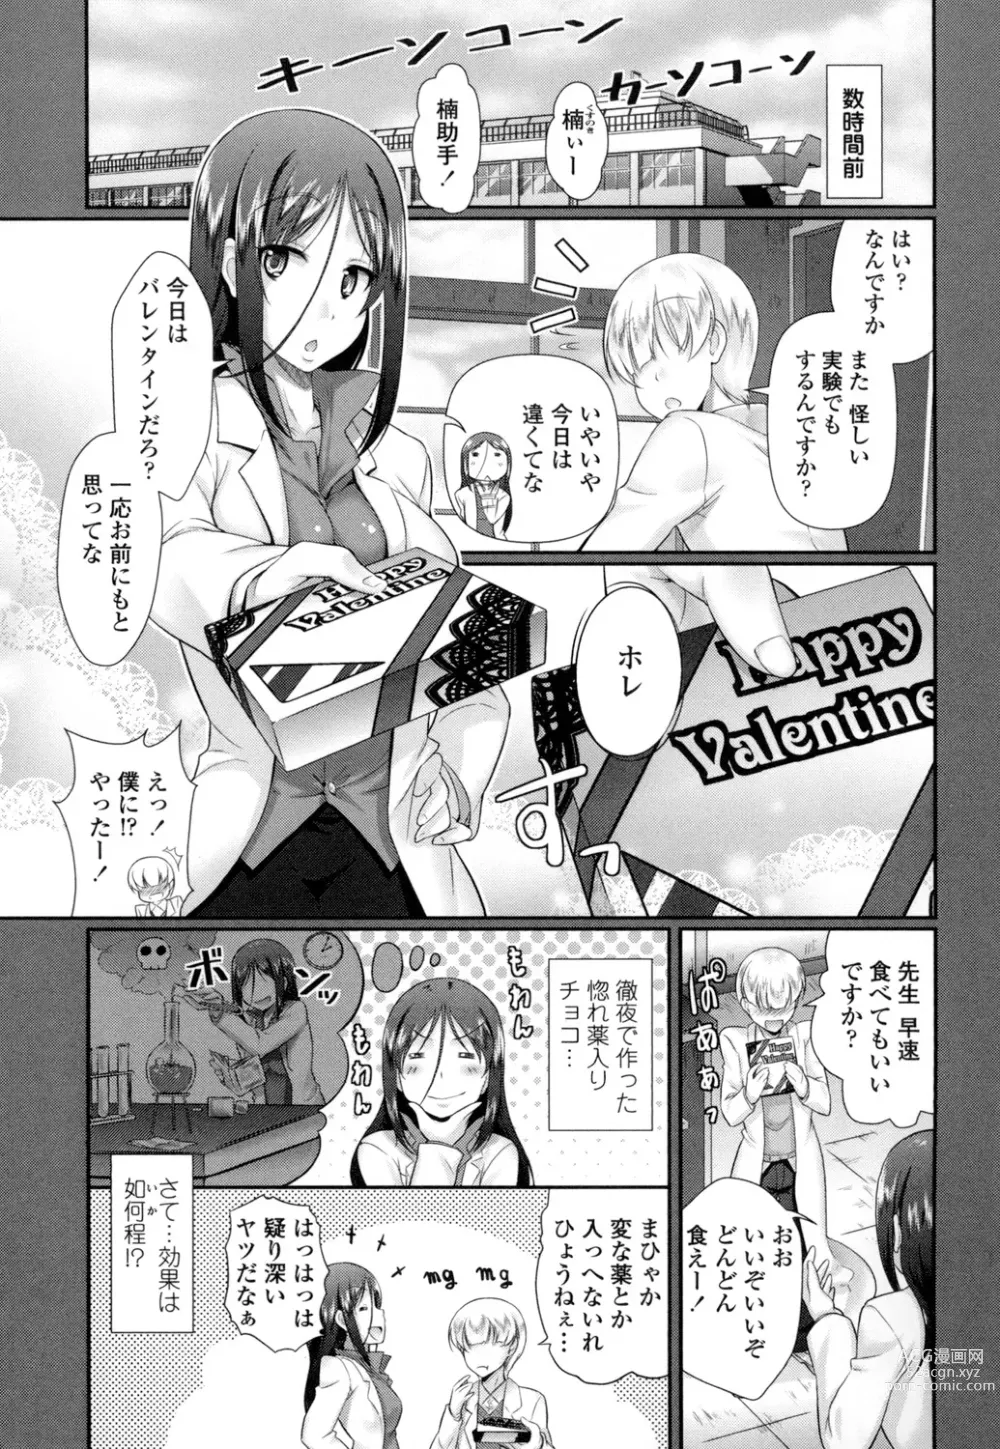 Page 194 of manga Oshiete Sensei